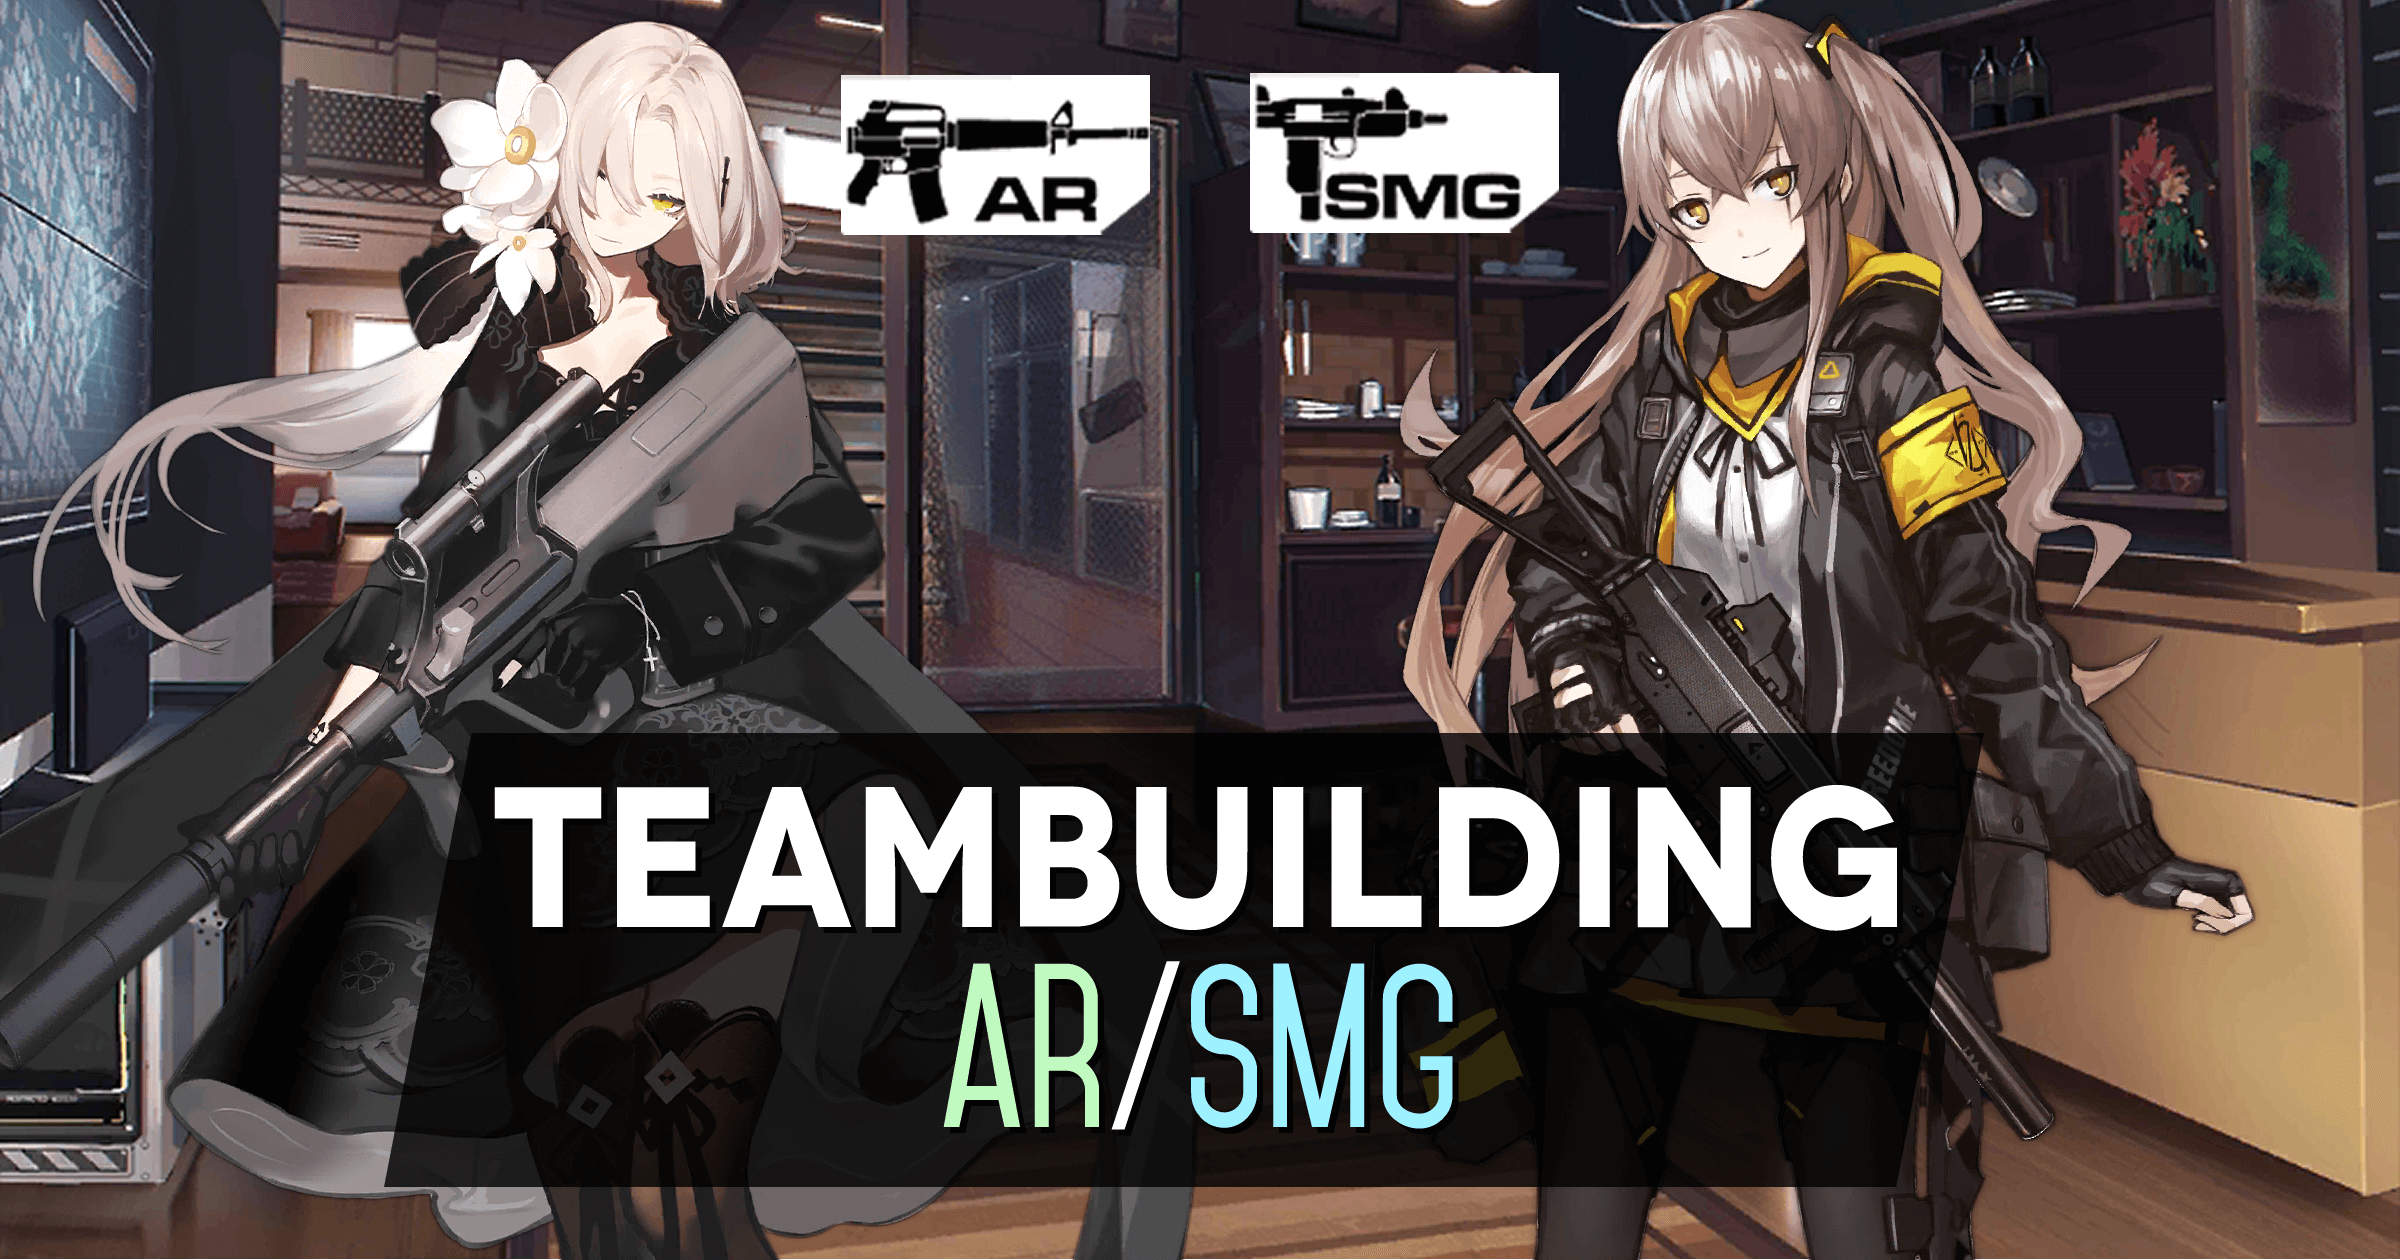 ARSMG teambuilding | Girls Frontline Wiki - GamePress